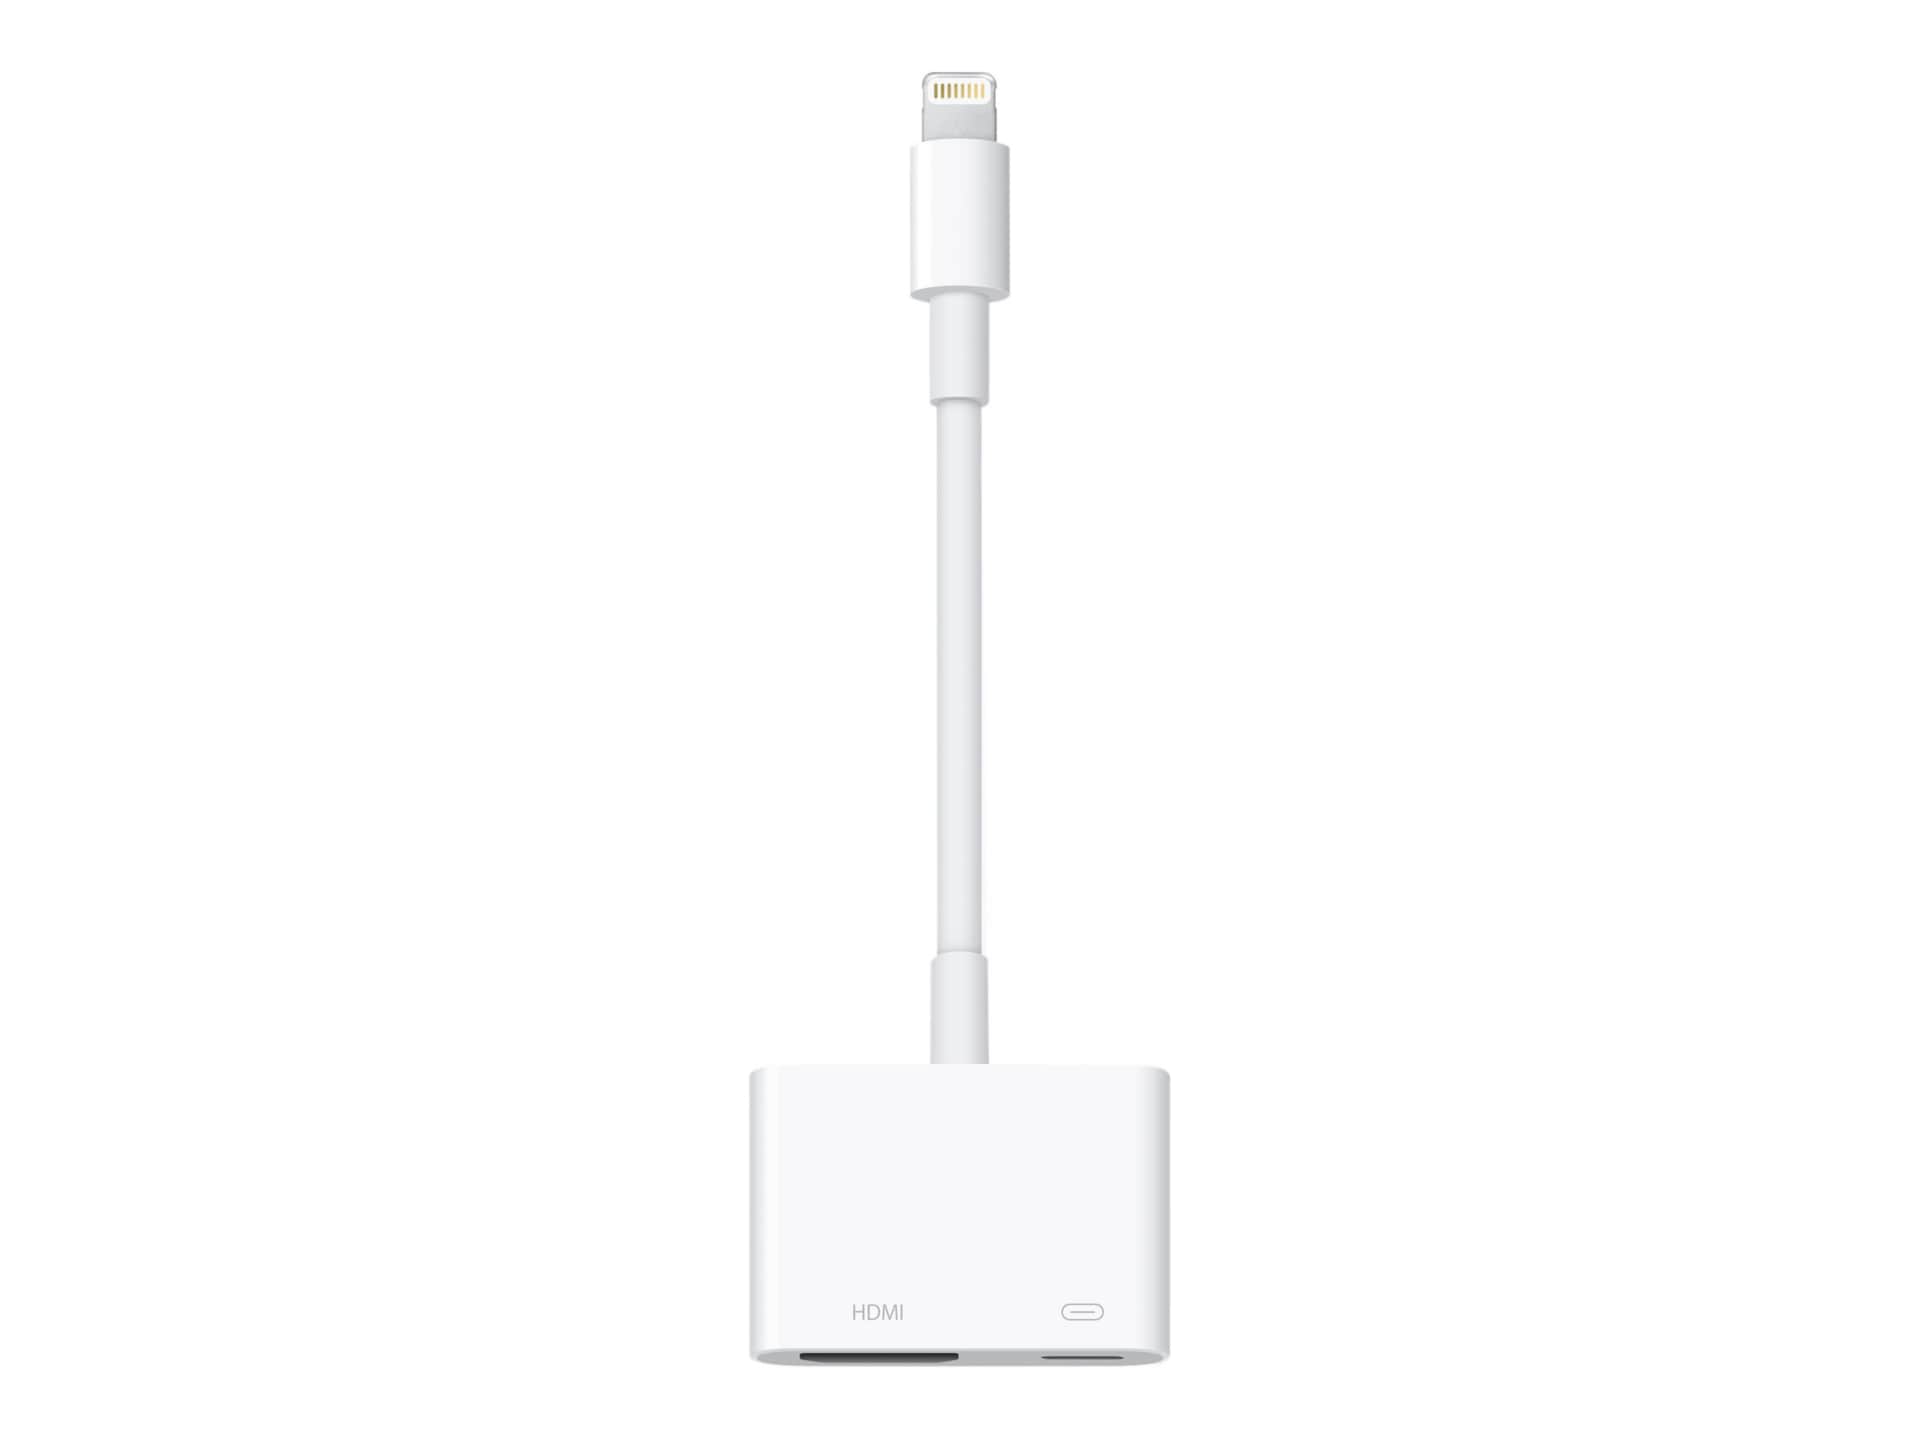 Comprar Adaptador Apple MD826AM/A Lightning a HDMI